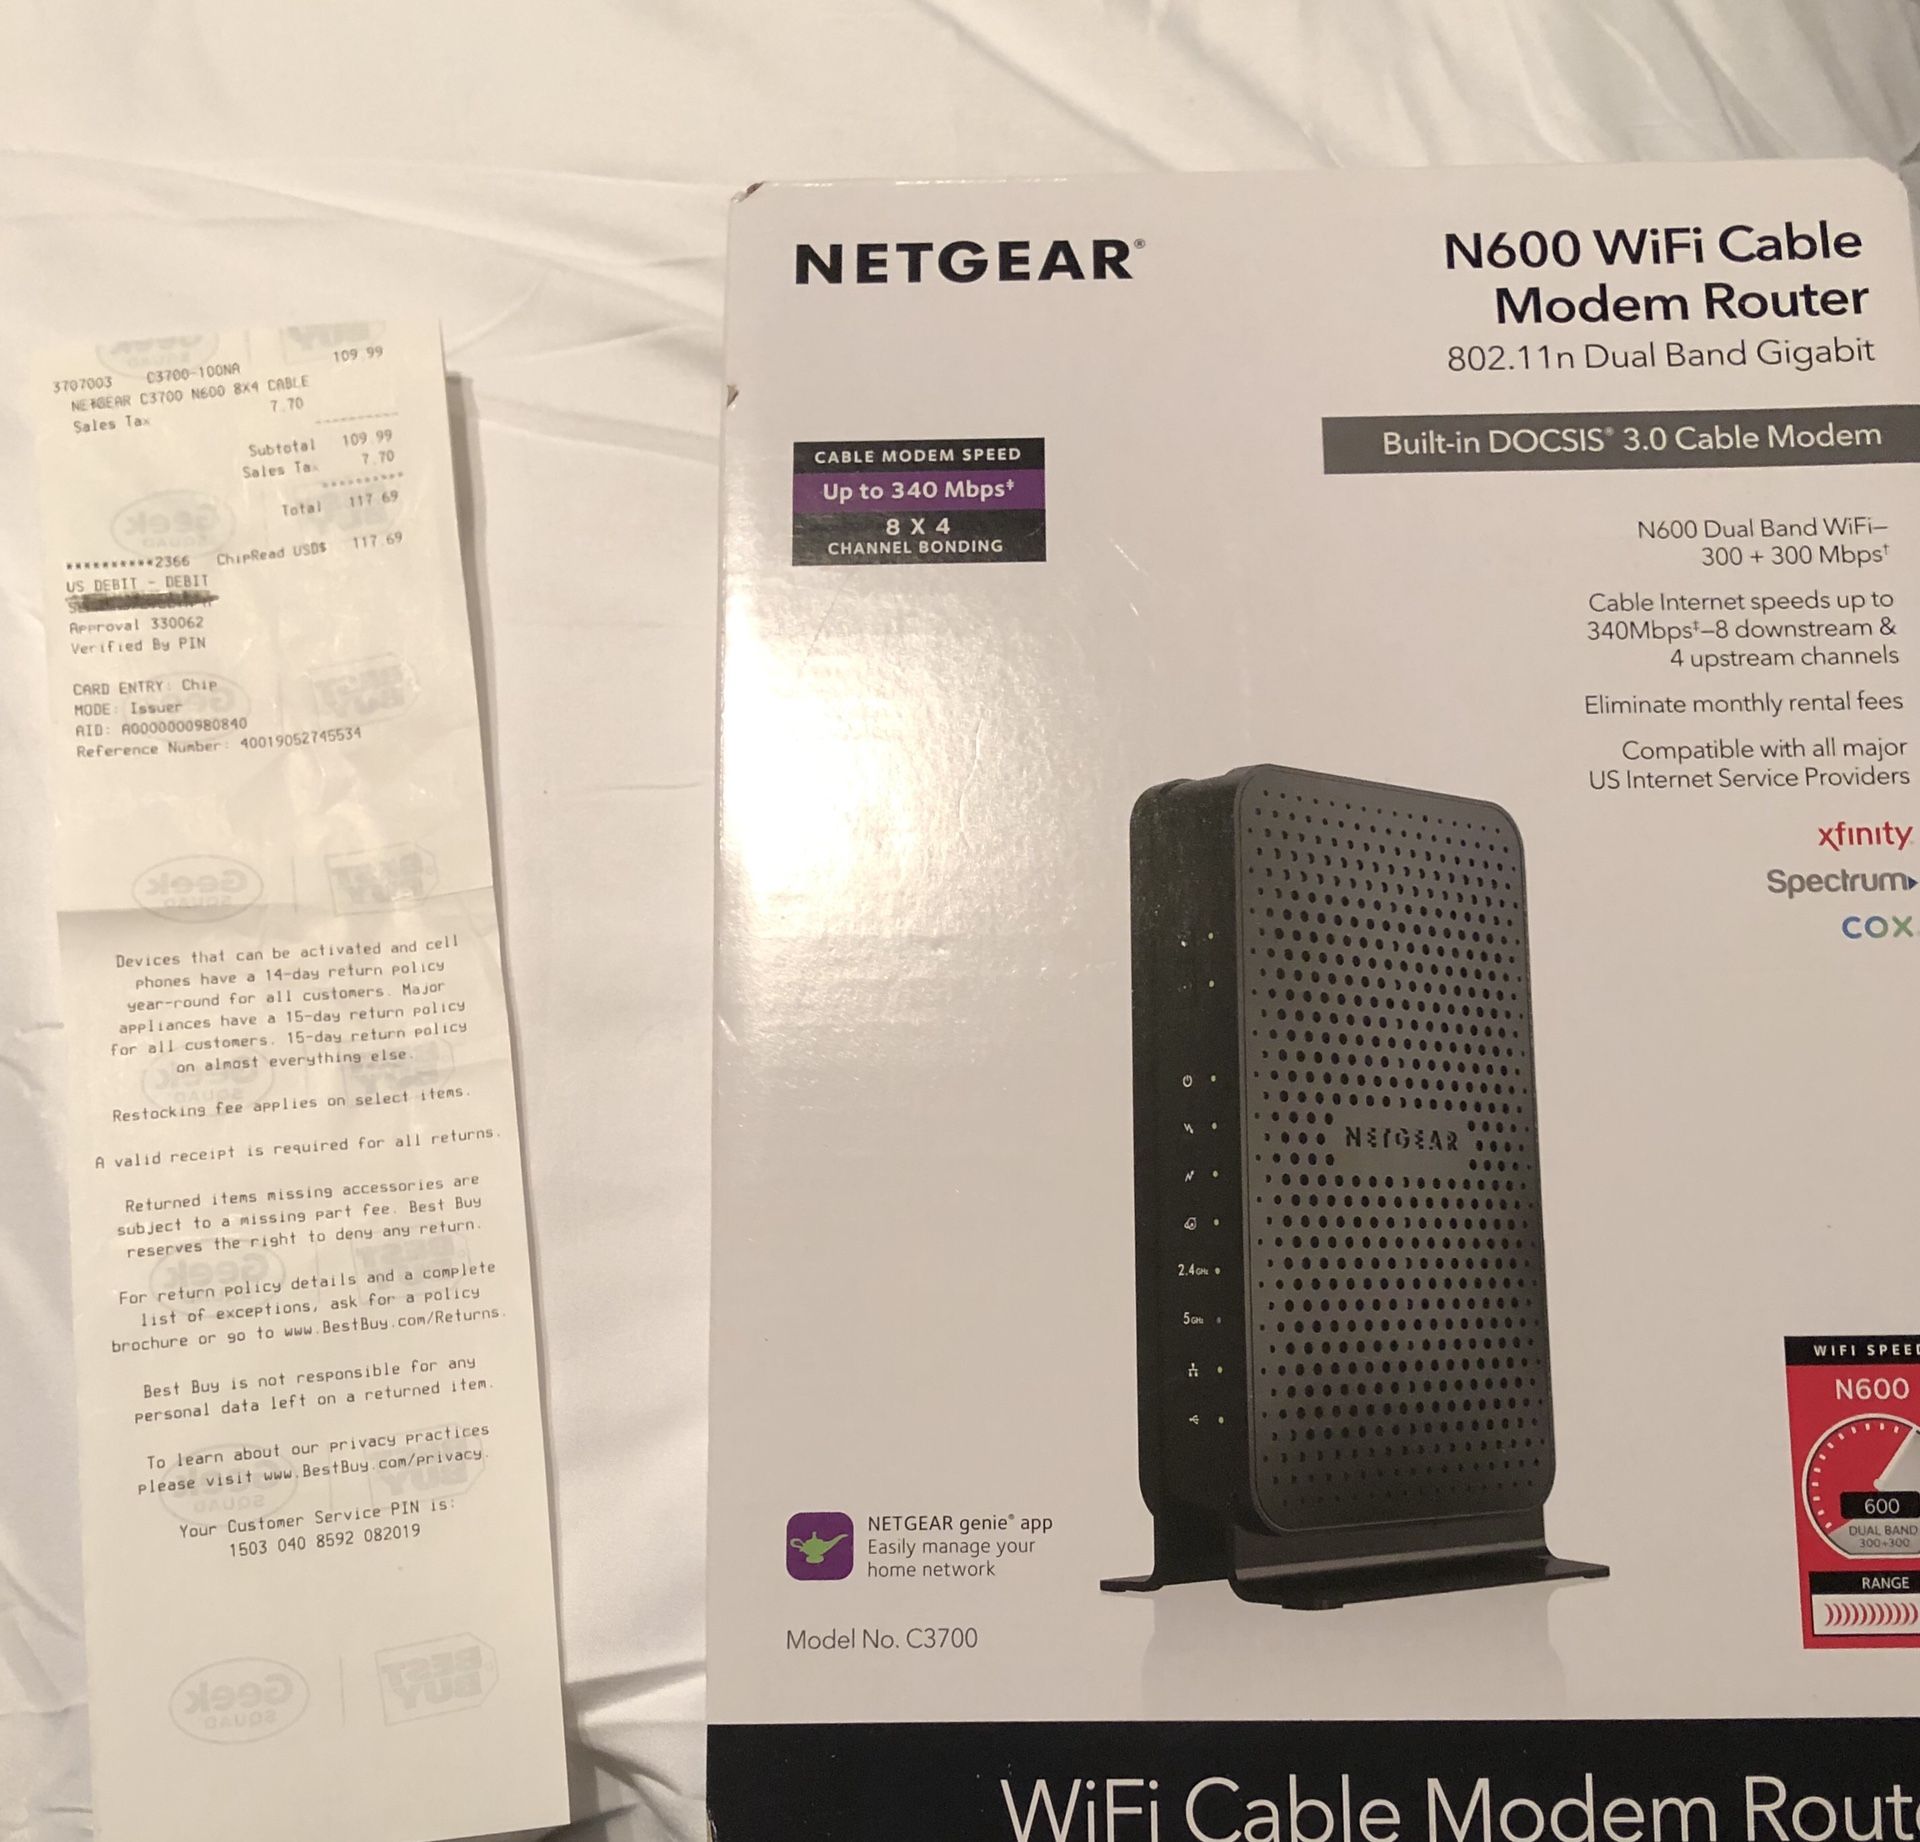 Netgear WiFi Cable Modem Router 802.11N Dual band gigabit / Xfinity / Spectrum / Cox